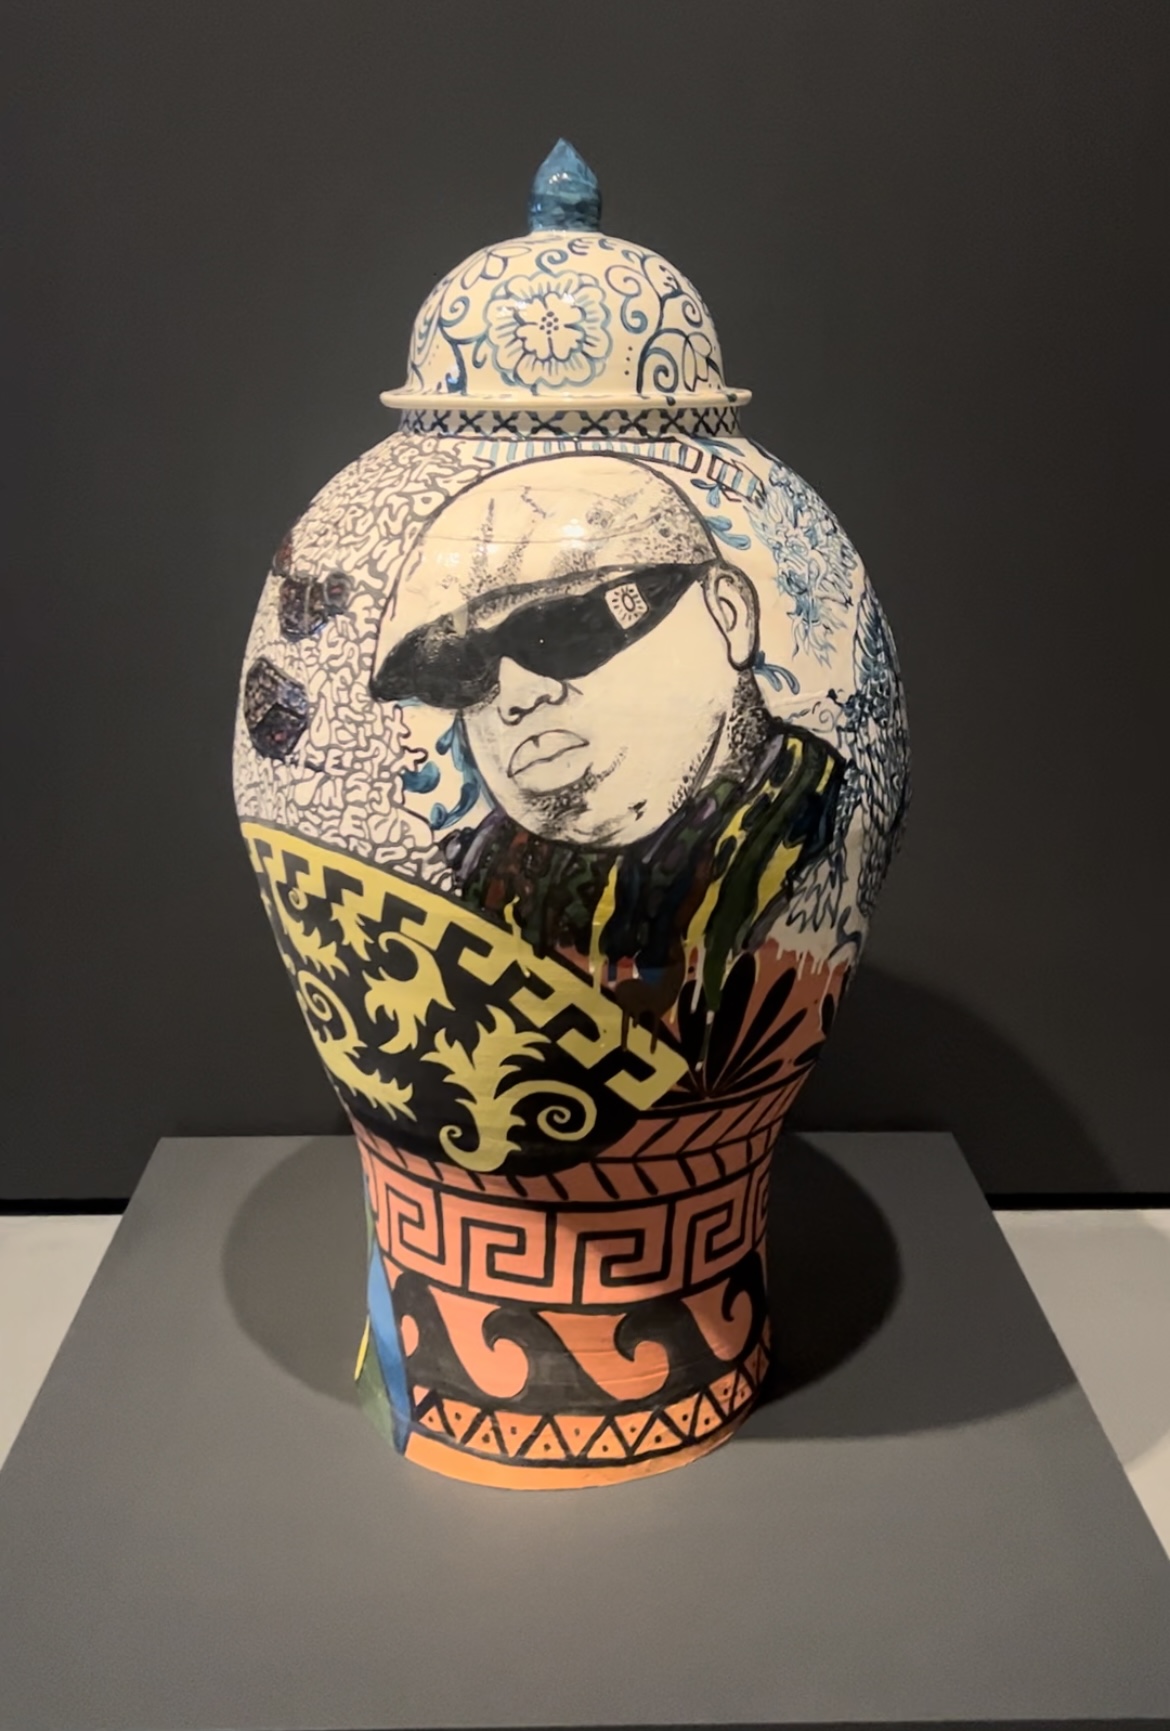 Roberto Lugo Glazed Ceramic of Rapper Biggie at the hip Hop Exhibit at BMA